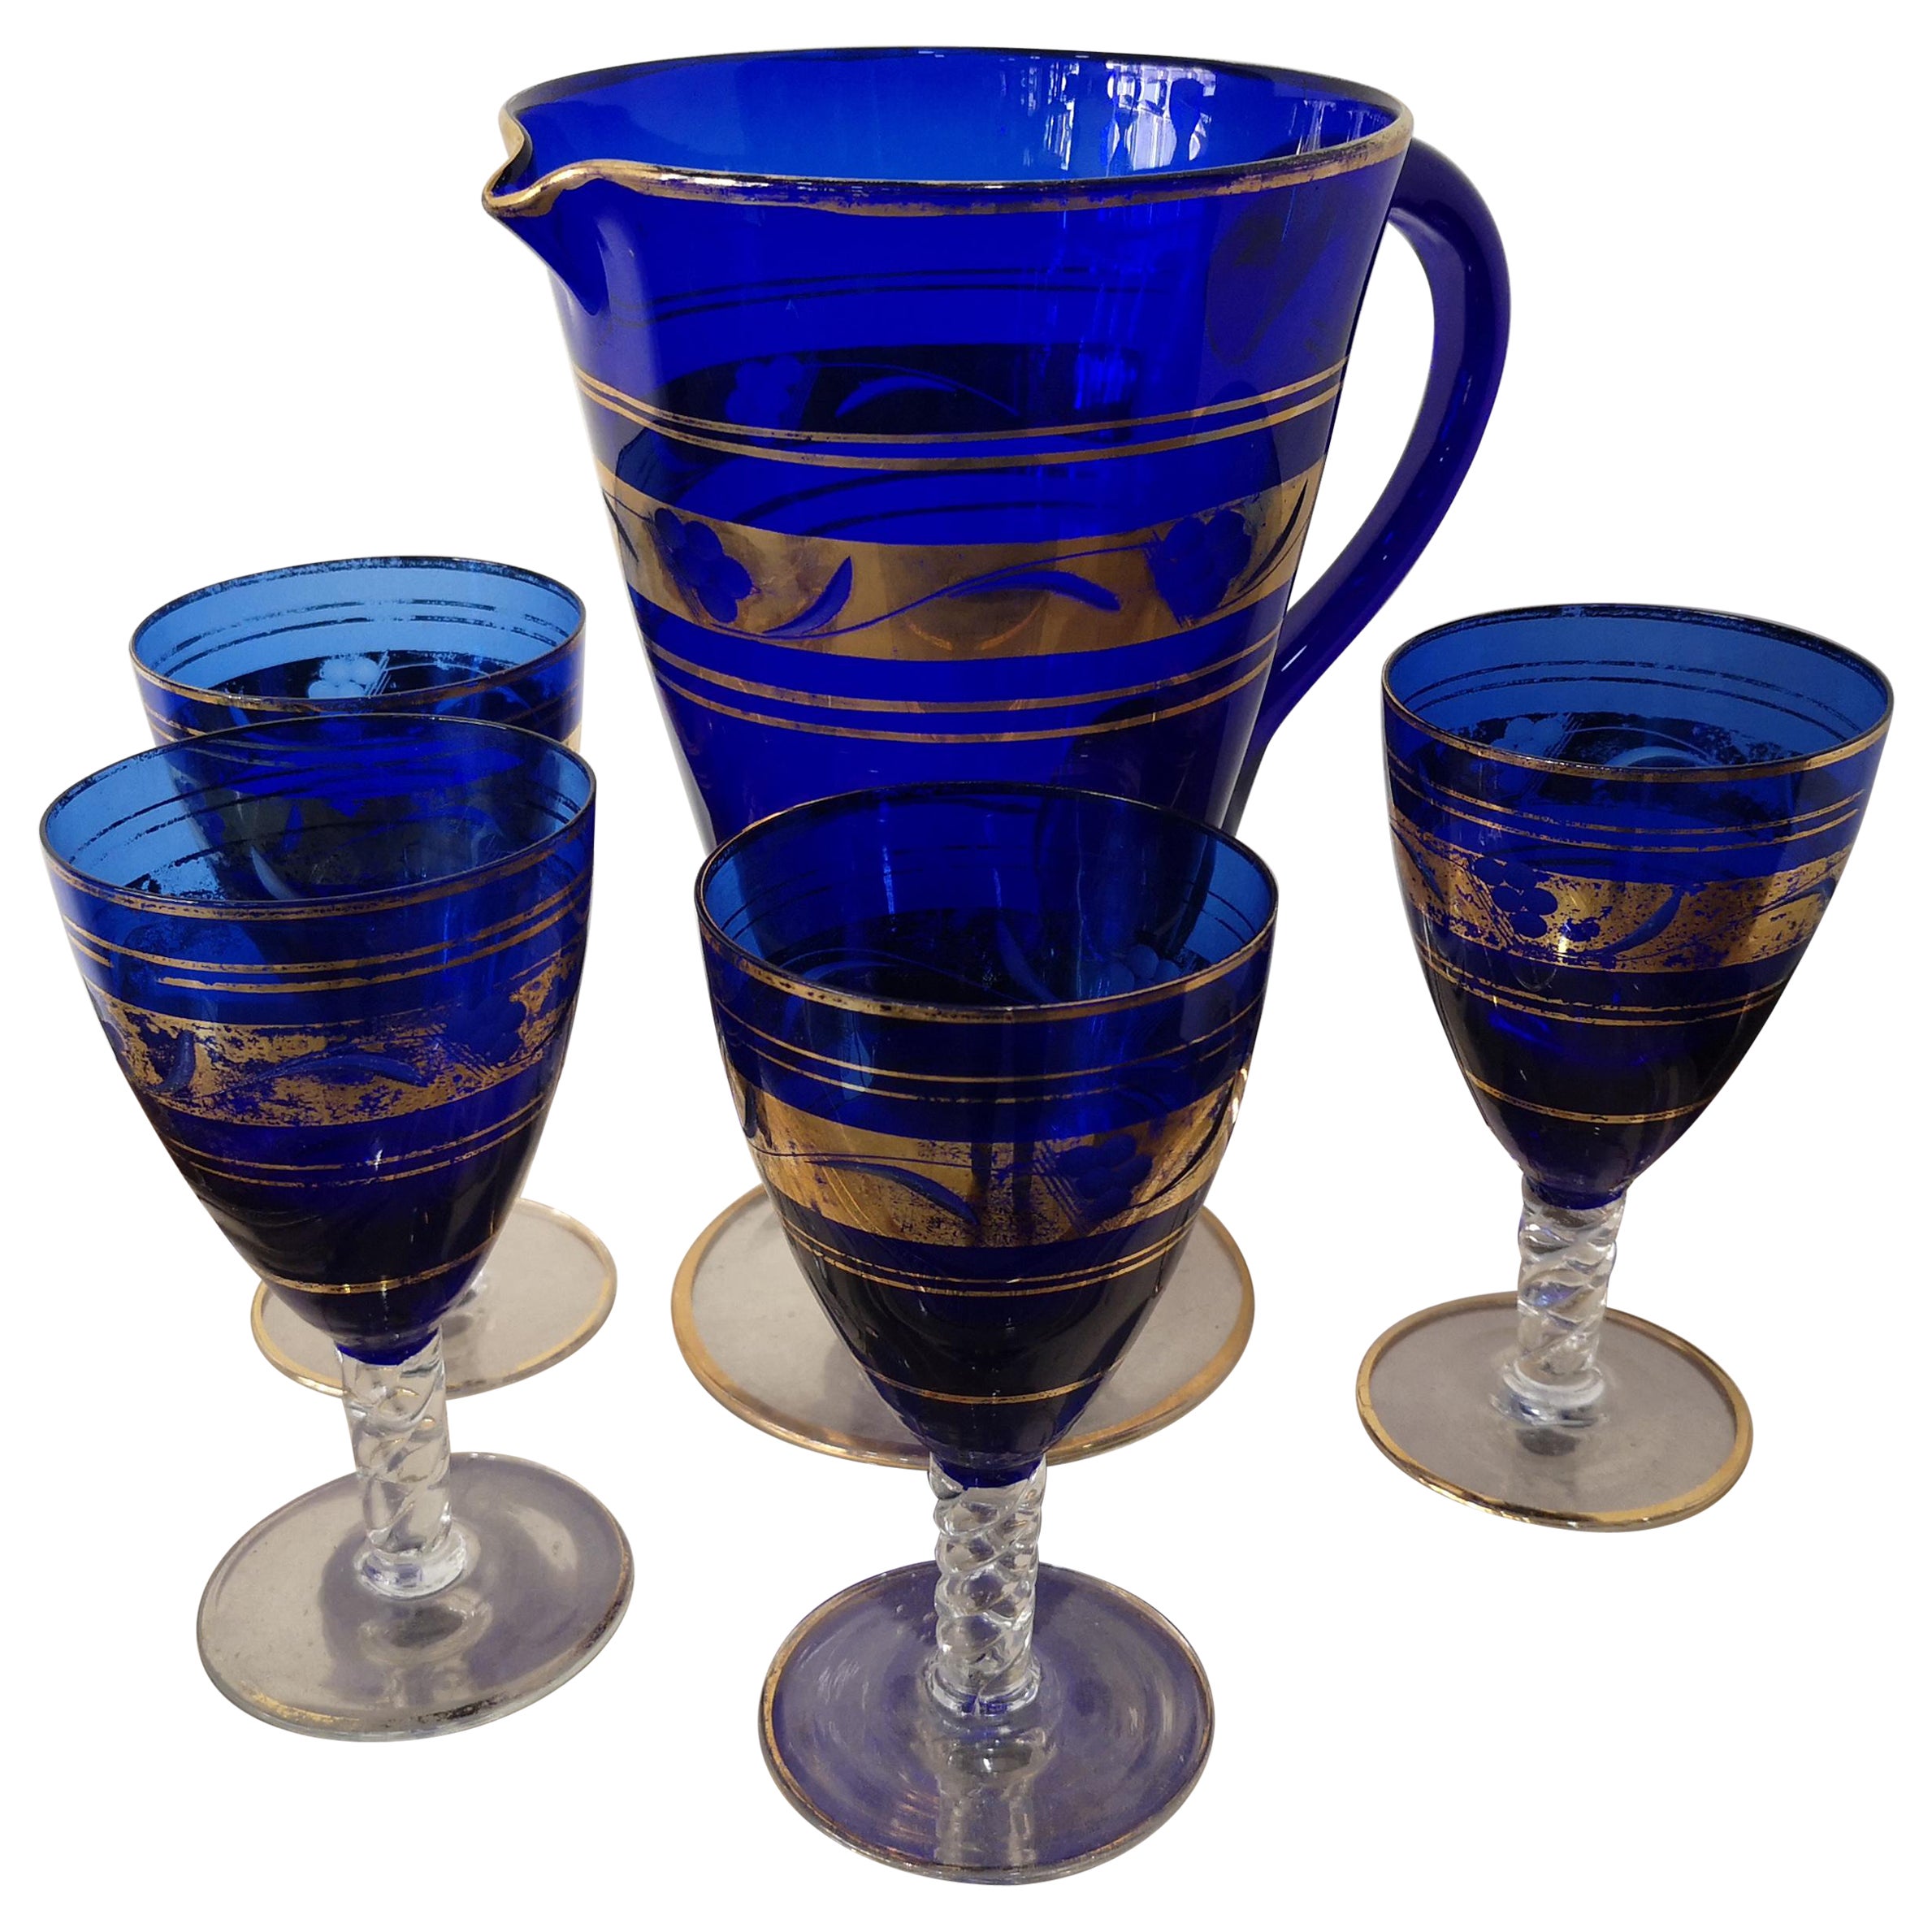 4 Gobelets et carafe en verre de Murano bleu cobalt et or, milieu du 19e siècle